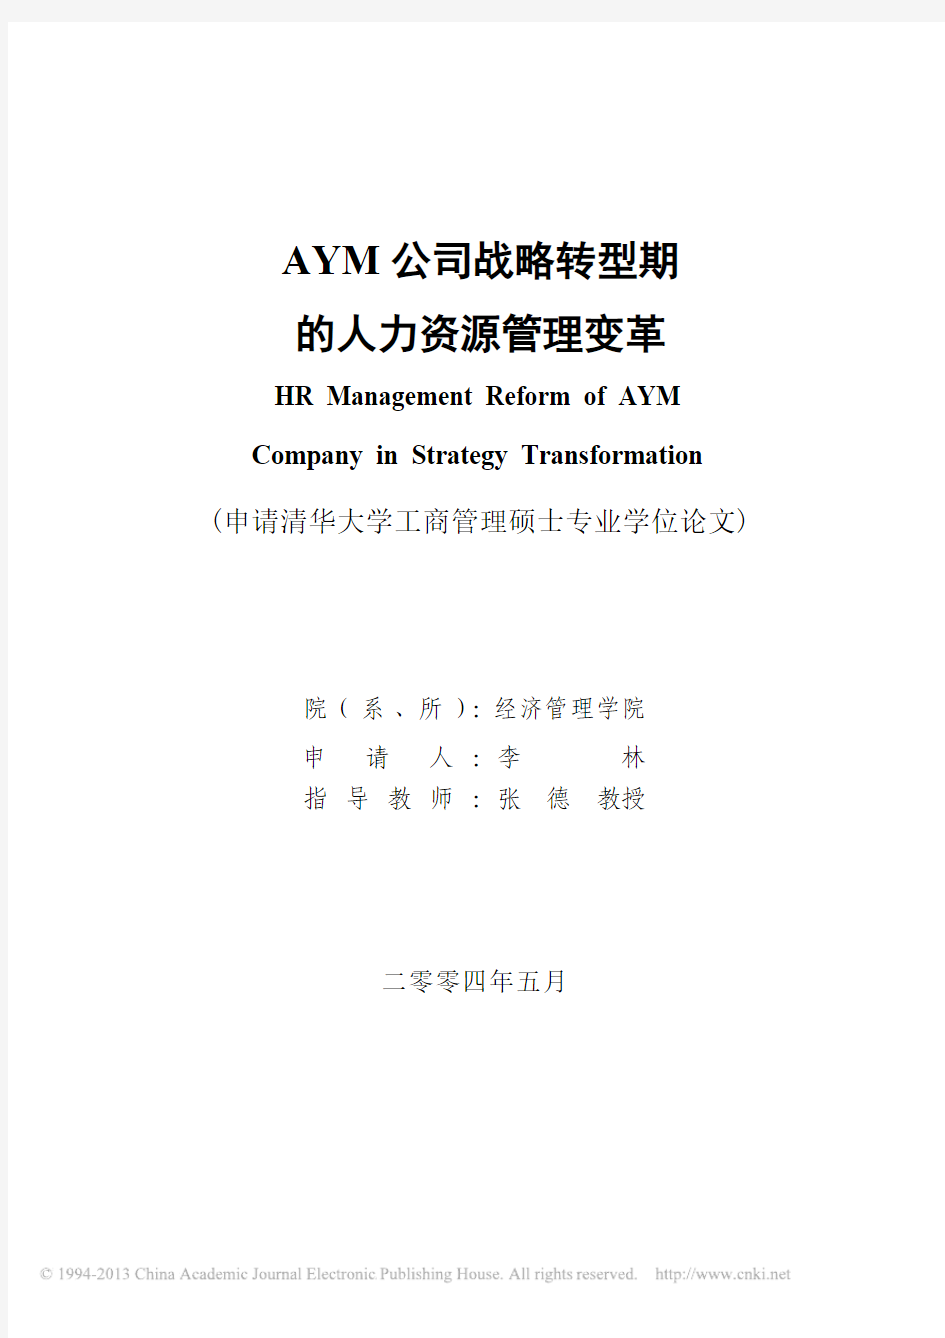 AYM公司战略转型期的人力资源管理变革